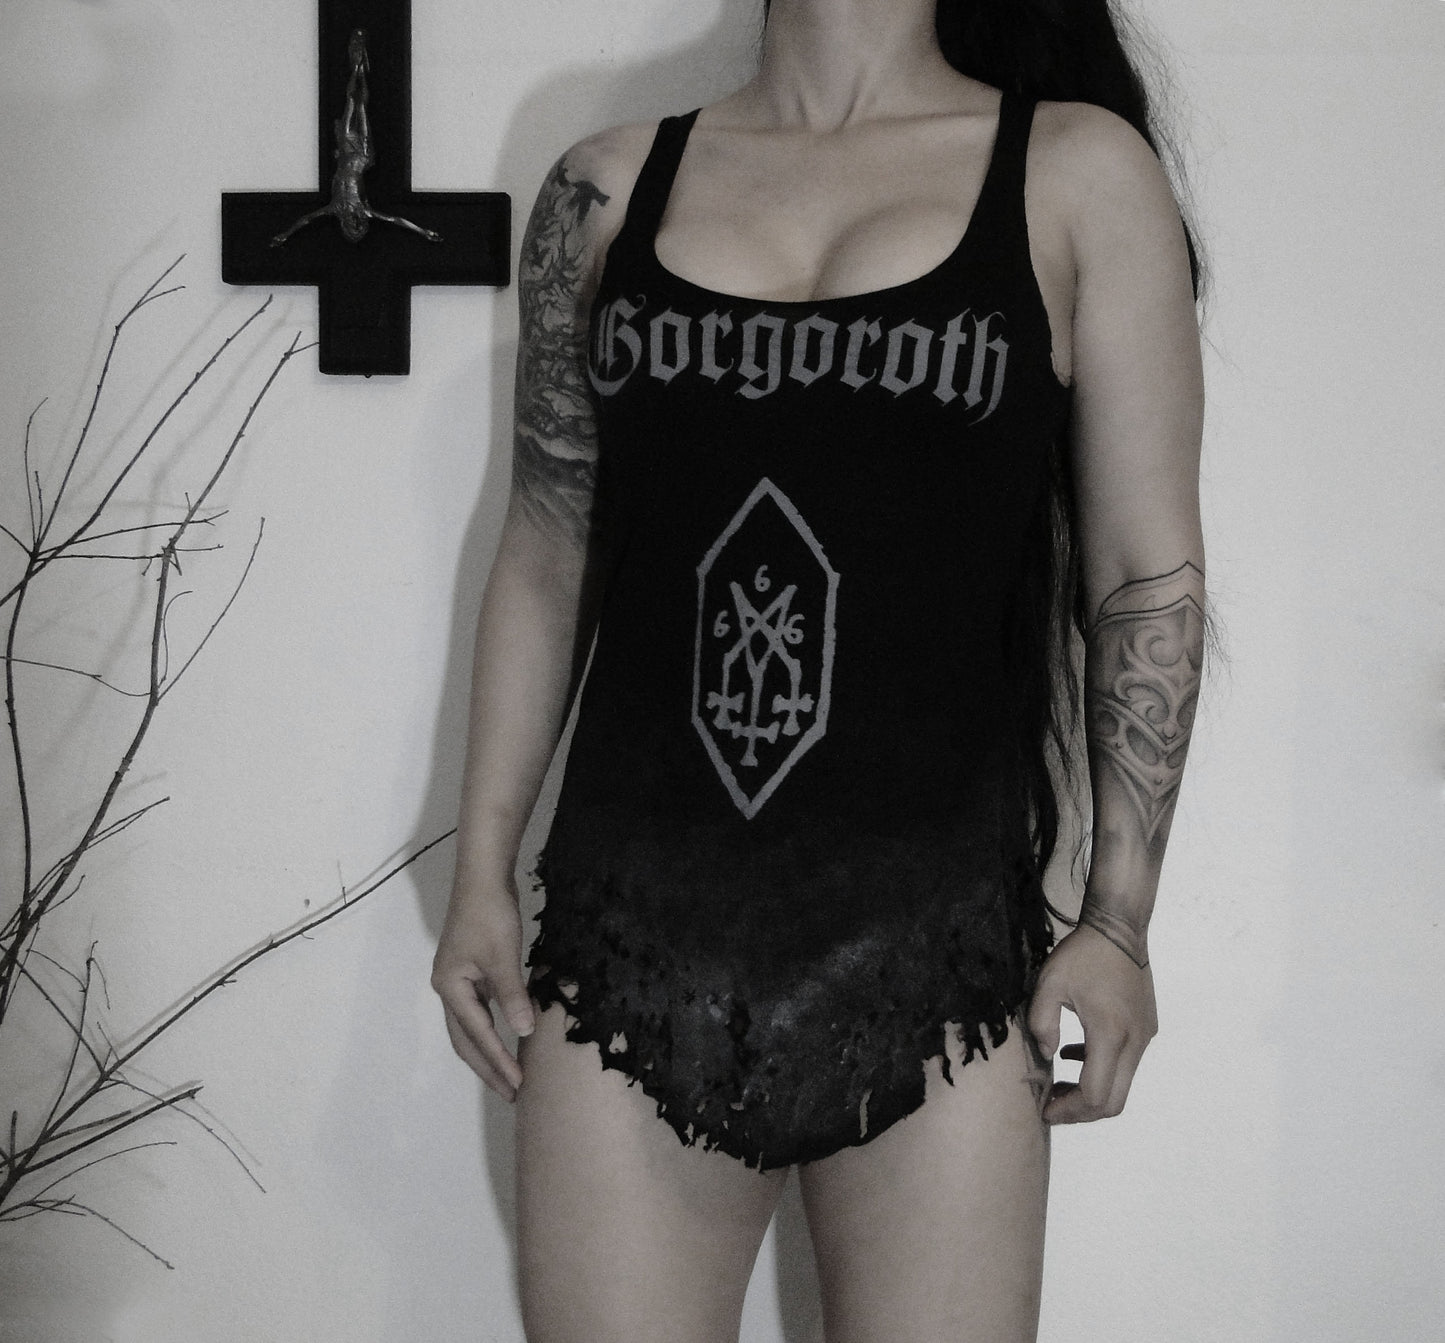 Gorgoroth Destroyed tank top ⇹ Handmade shirt